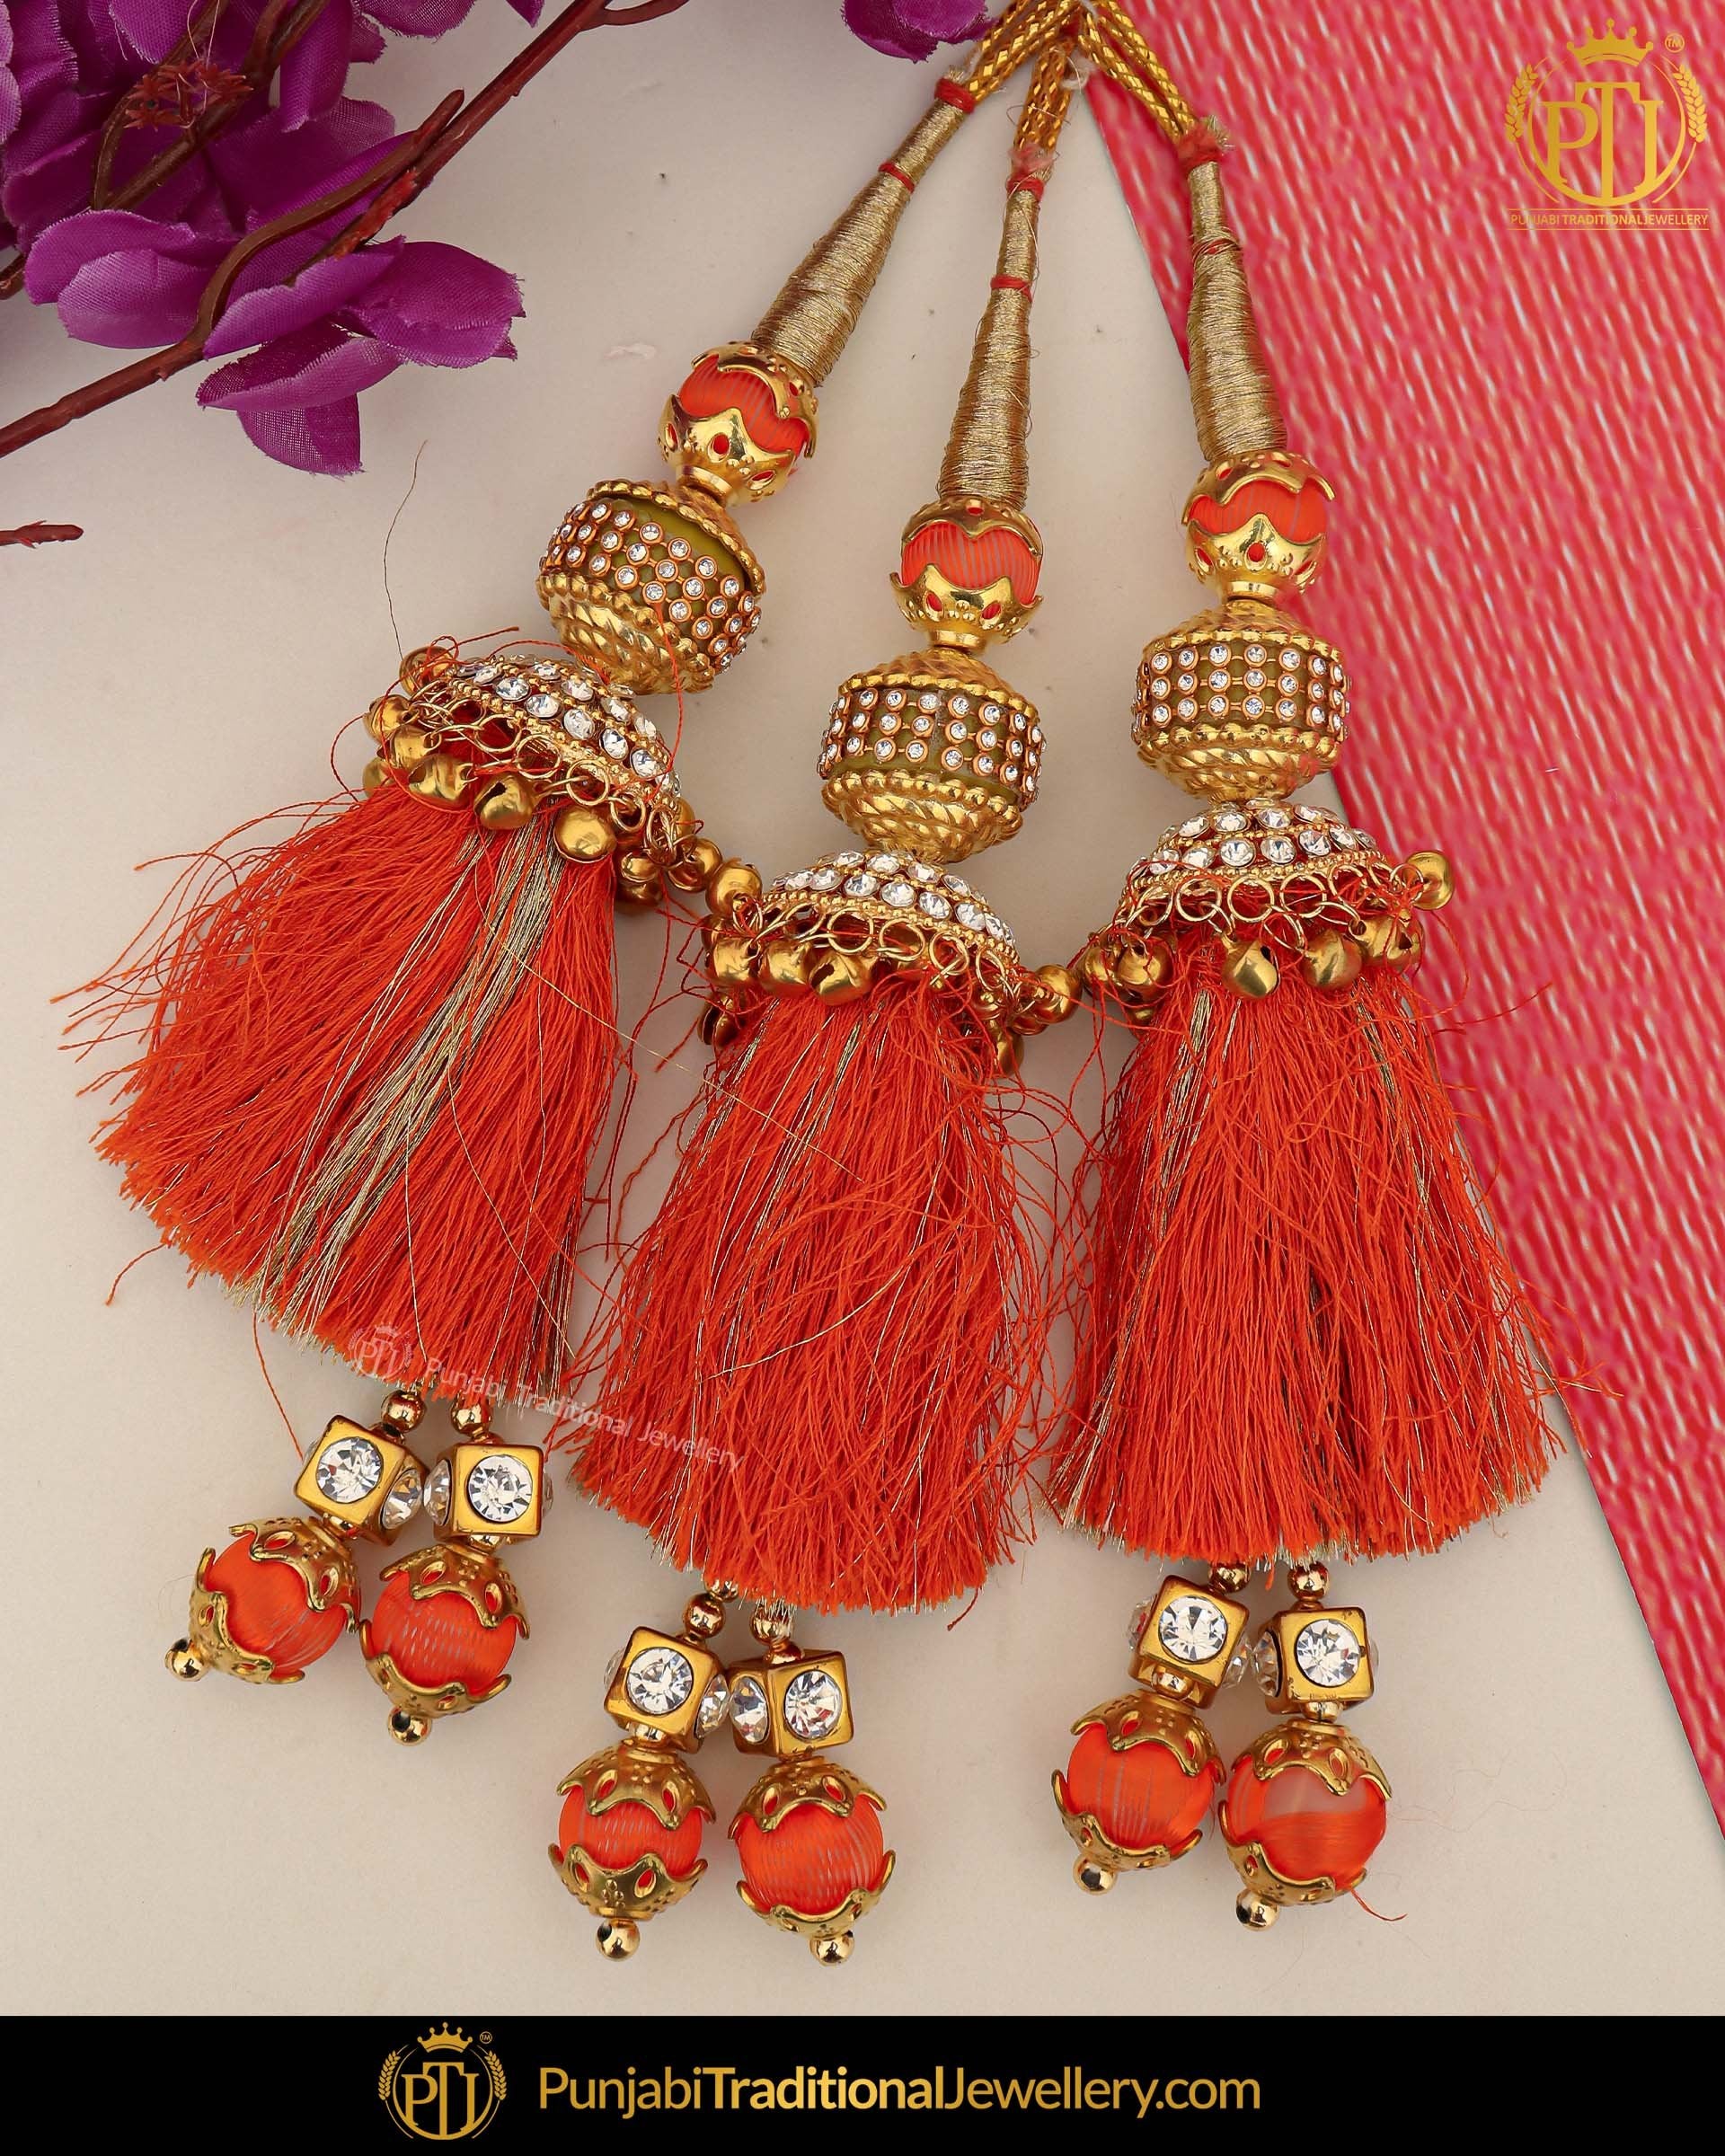 Orange Color Prandi Lottan With Mirror | Pipal Diya Peengan by Punjabi Traditional Jewellery Exclusive